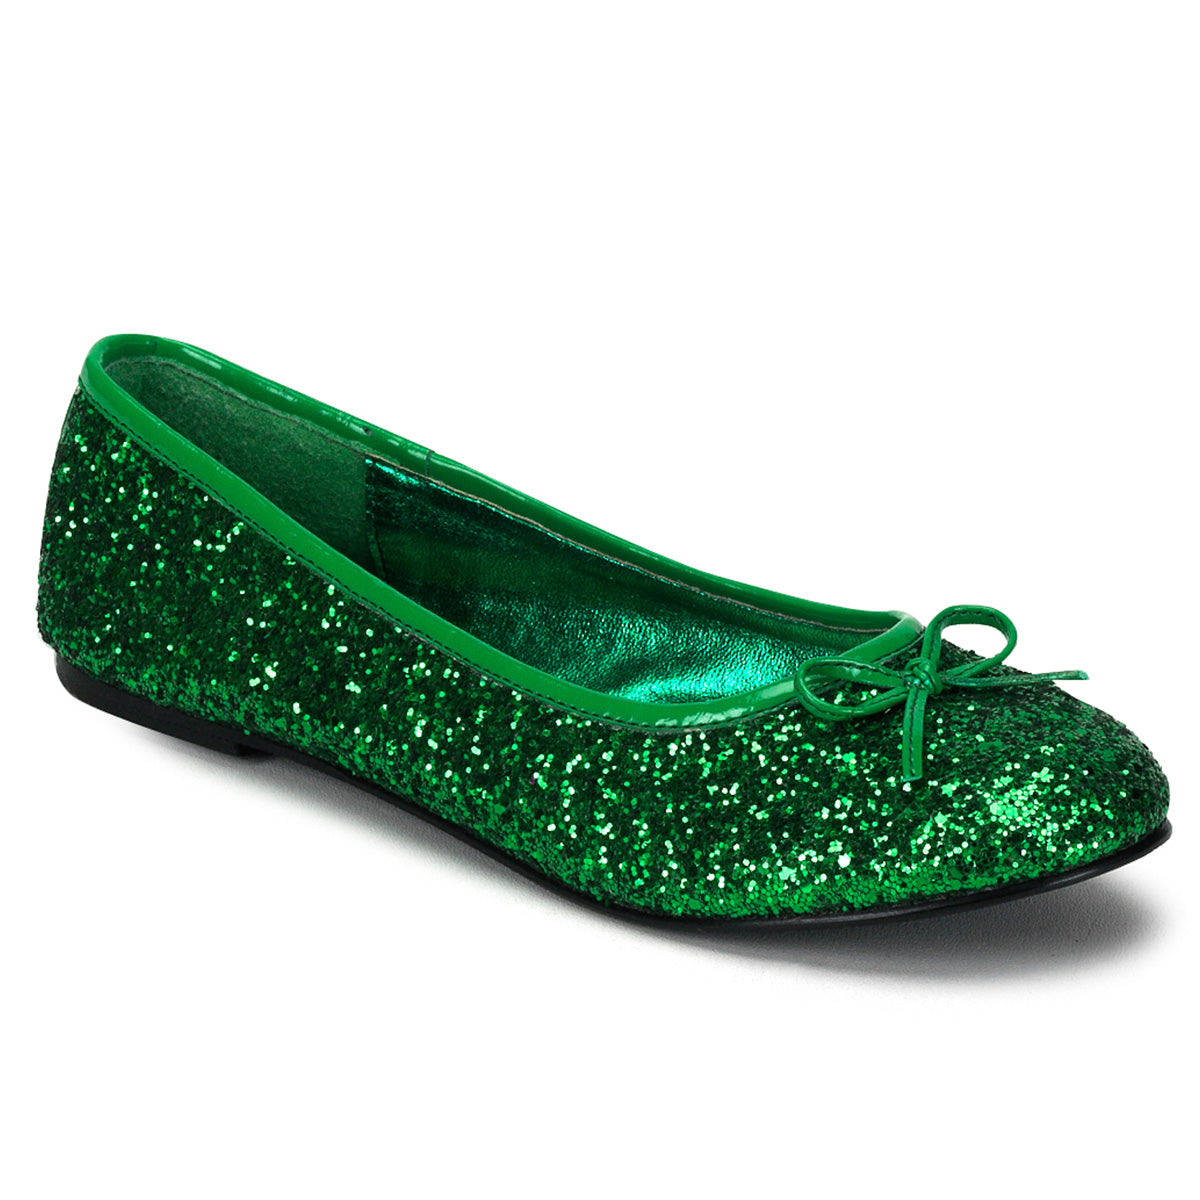 STAR-16G Fancy Dress Costume Funtasma Women's Shoes Green Gltr